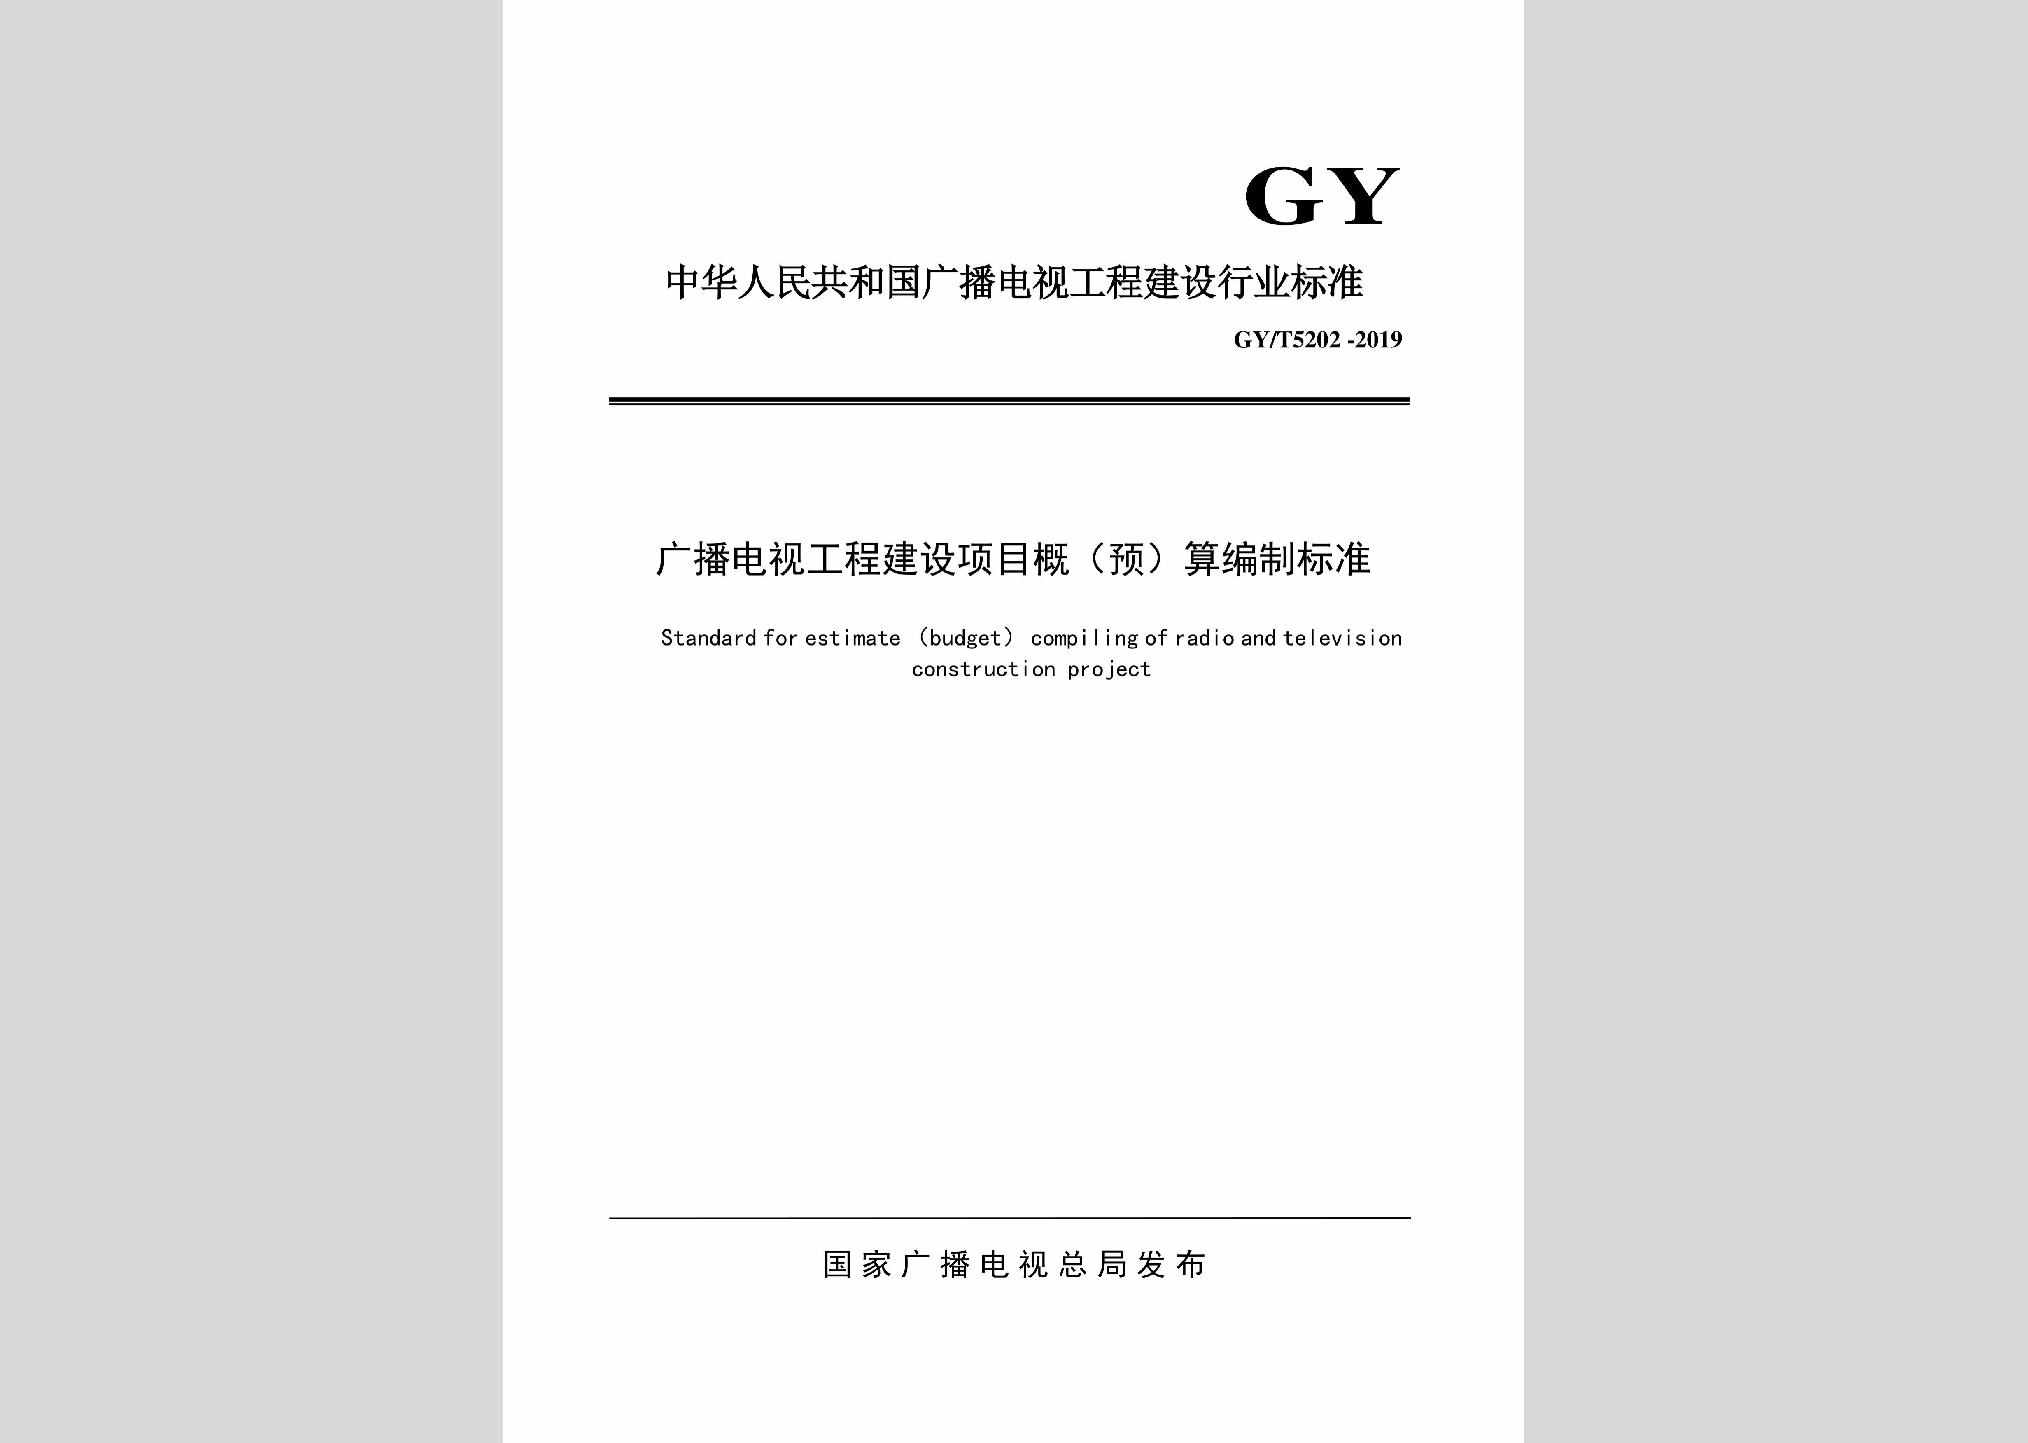 GY/T5202-2019：广播电视工程建设项目概（预）算编制标准